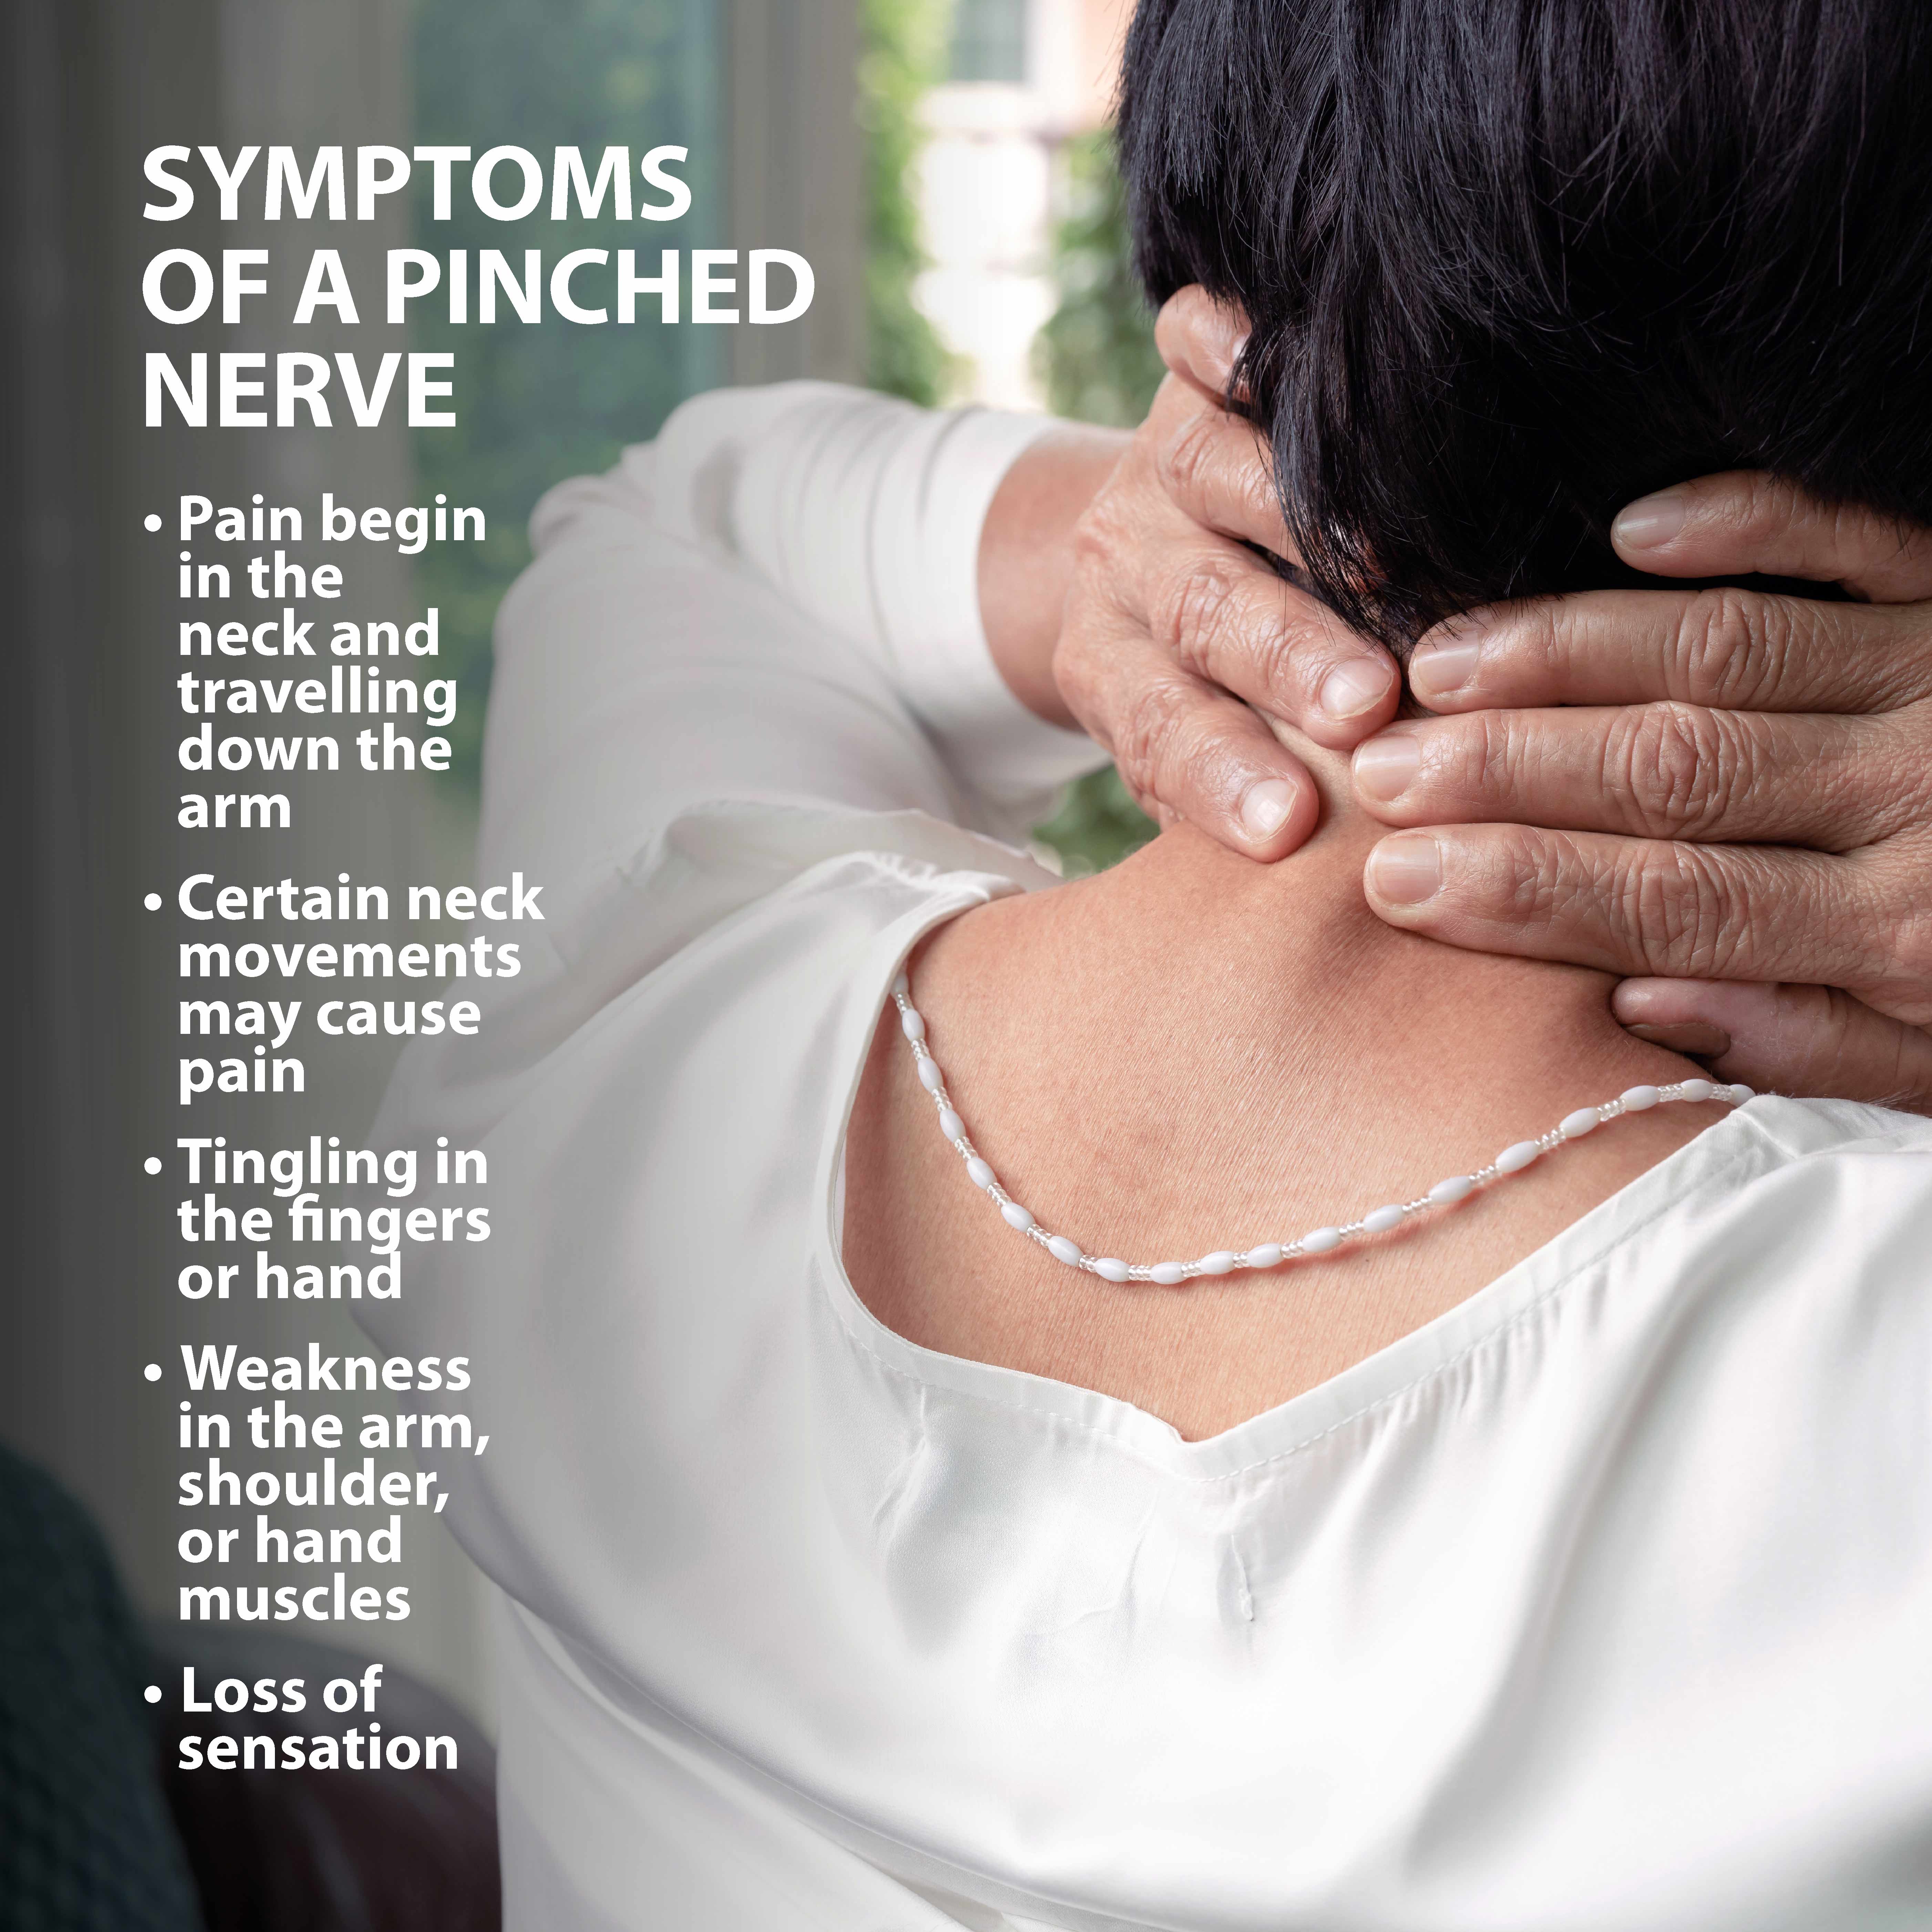 jage Advarsel Mig Pinched Nerve Information | Florida Orthopaedic Institute